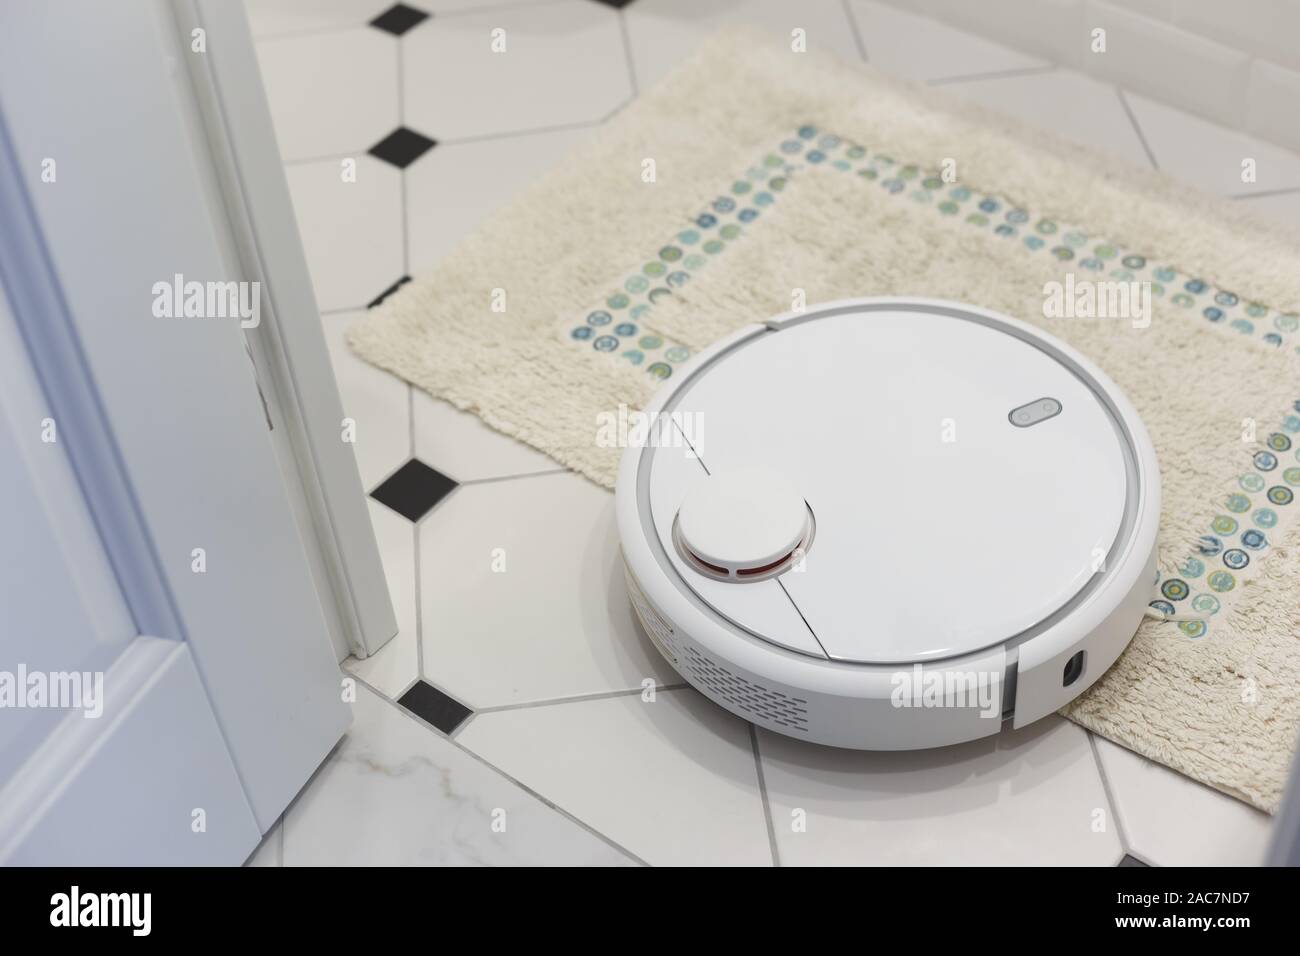 White robot vacuum cleaner on carpet in bathroom Stock Photo - Alamy